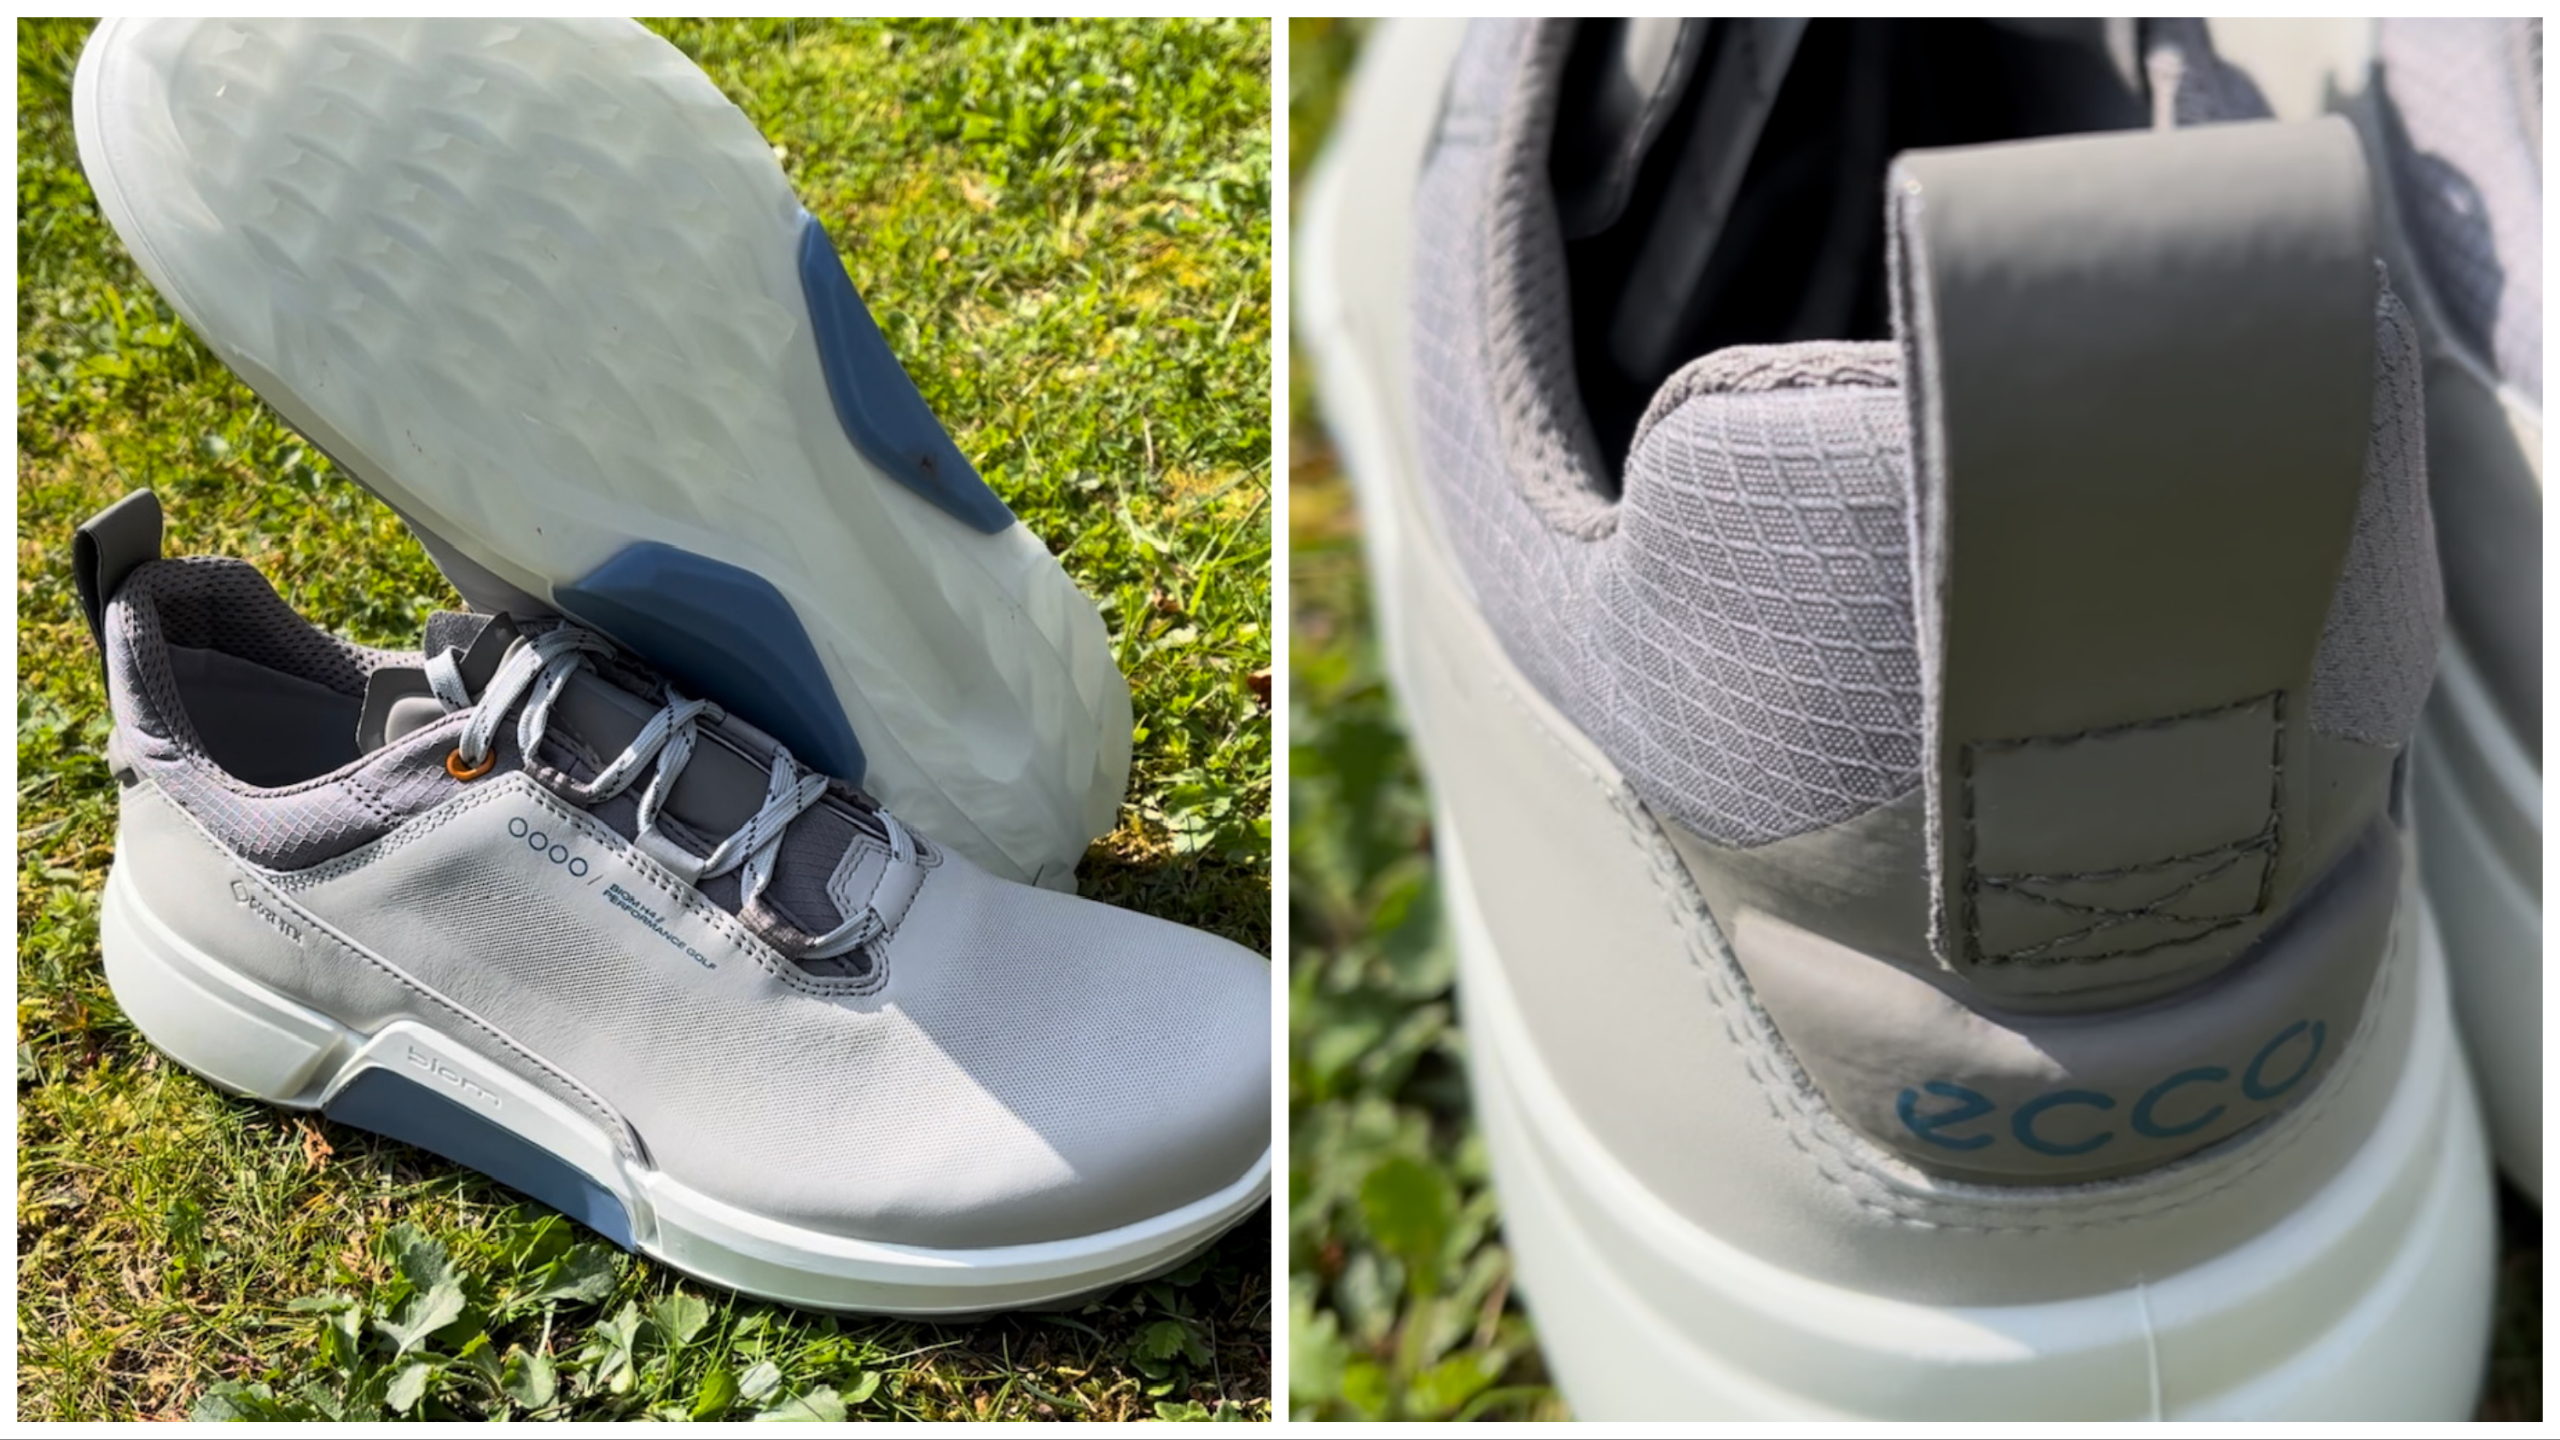 BIOM H4 Golf Shoes: "The ultimate hybrid golf shoe this season" GolfMagic